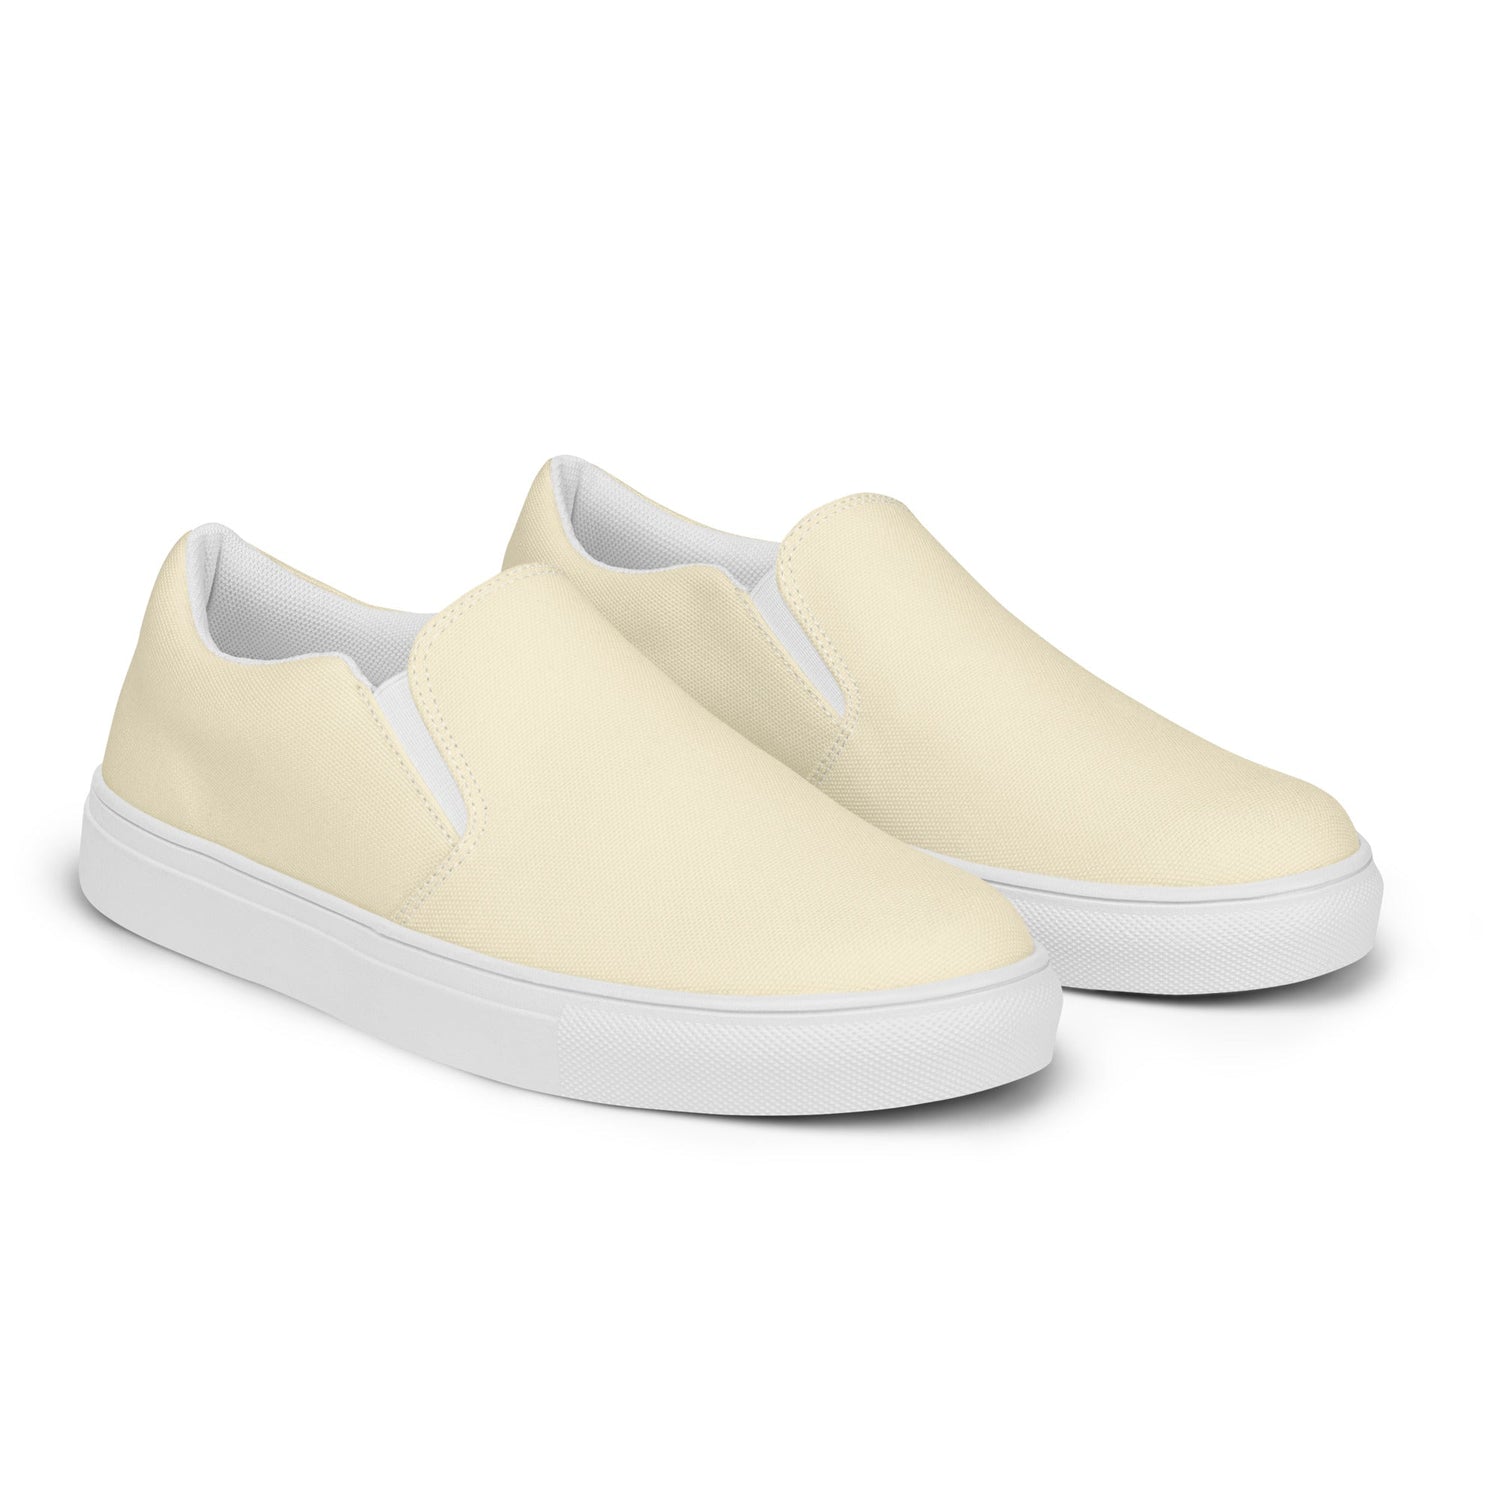 klasneakers Women’s slip-on canvas shoes - Cream